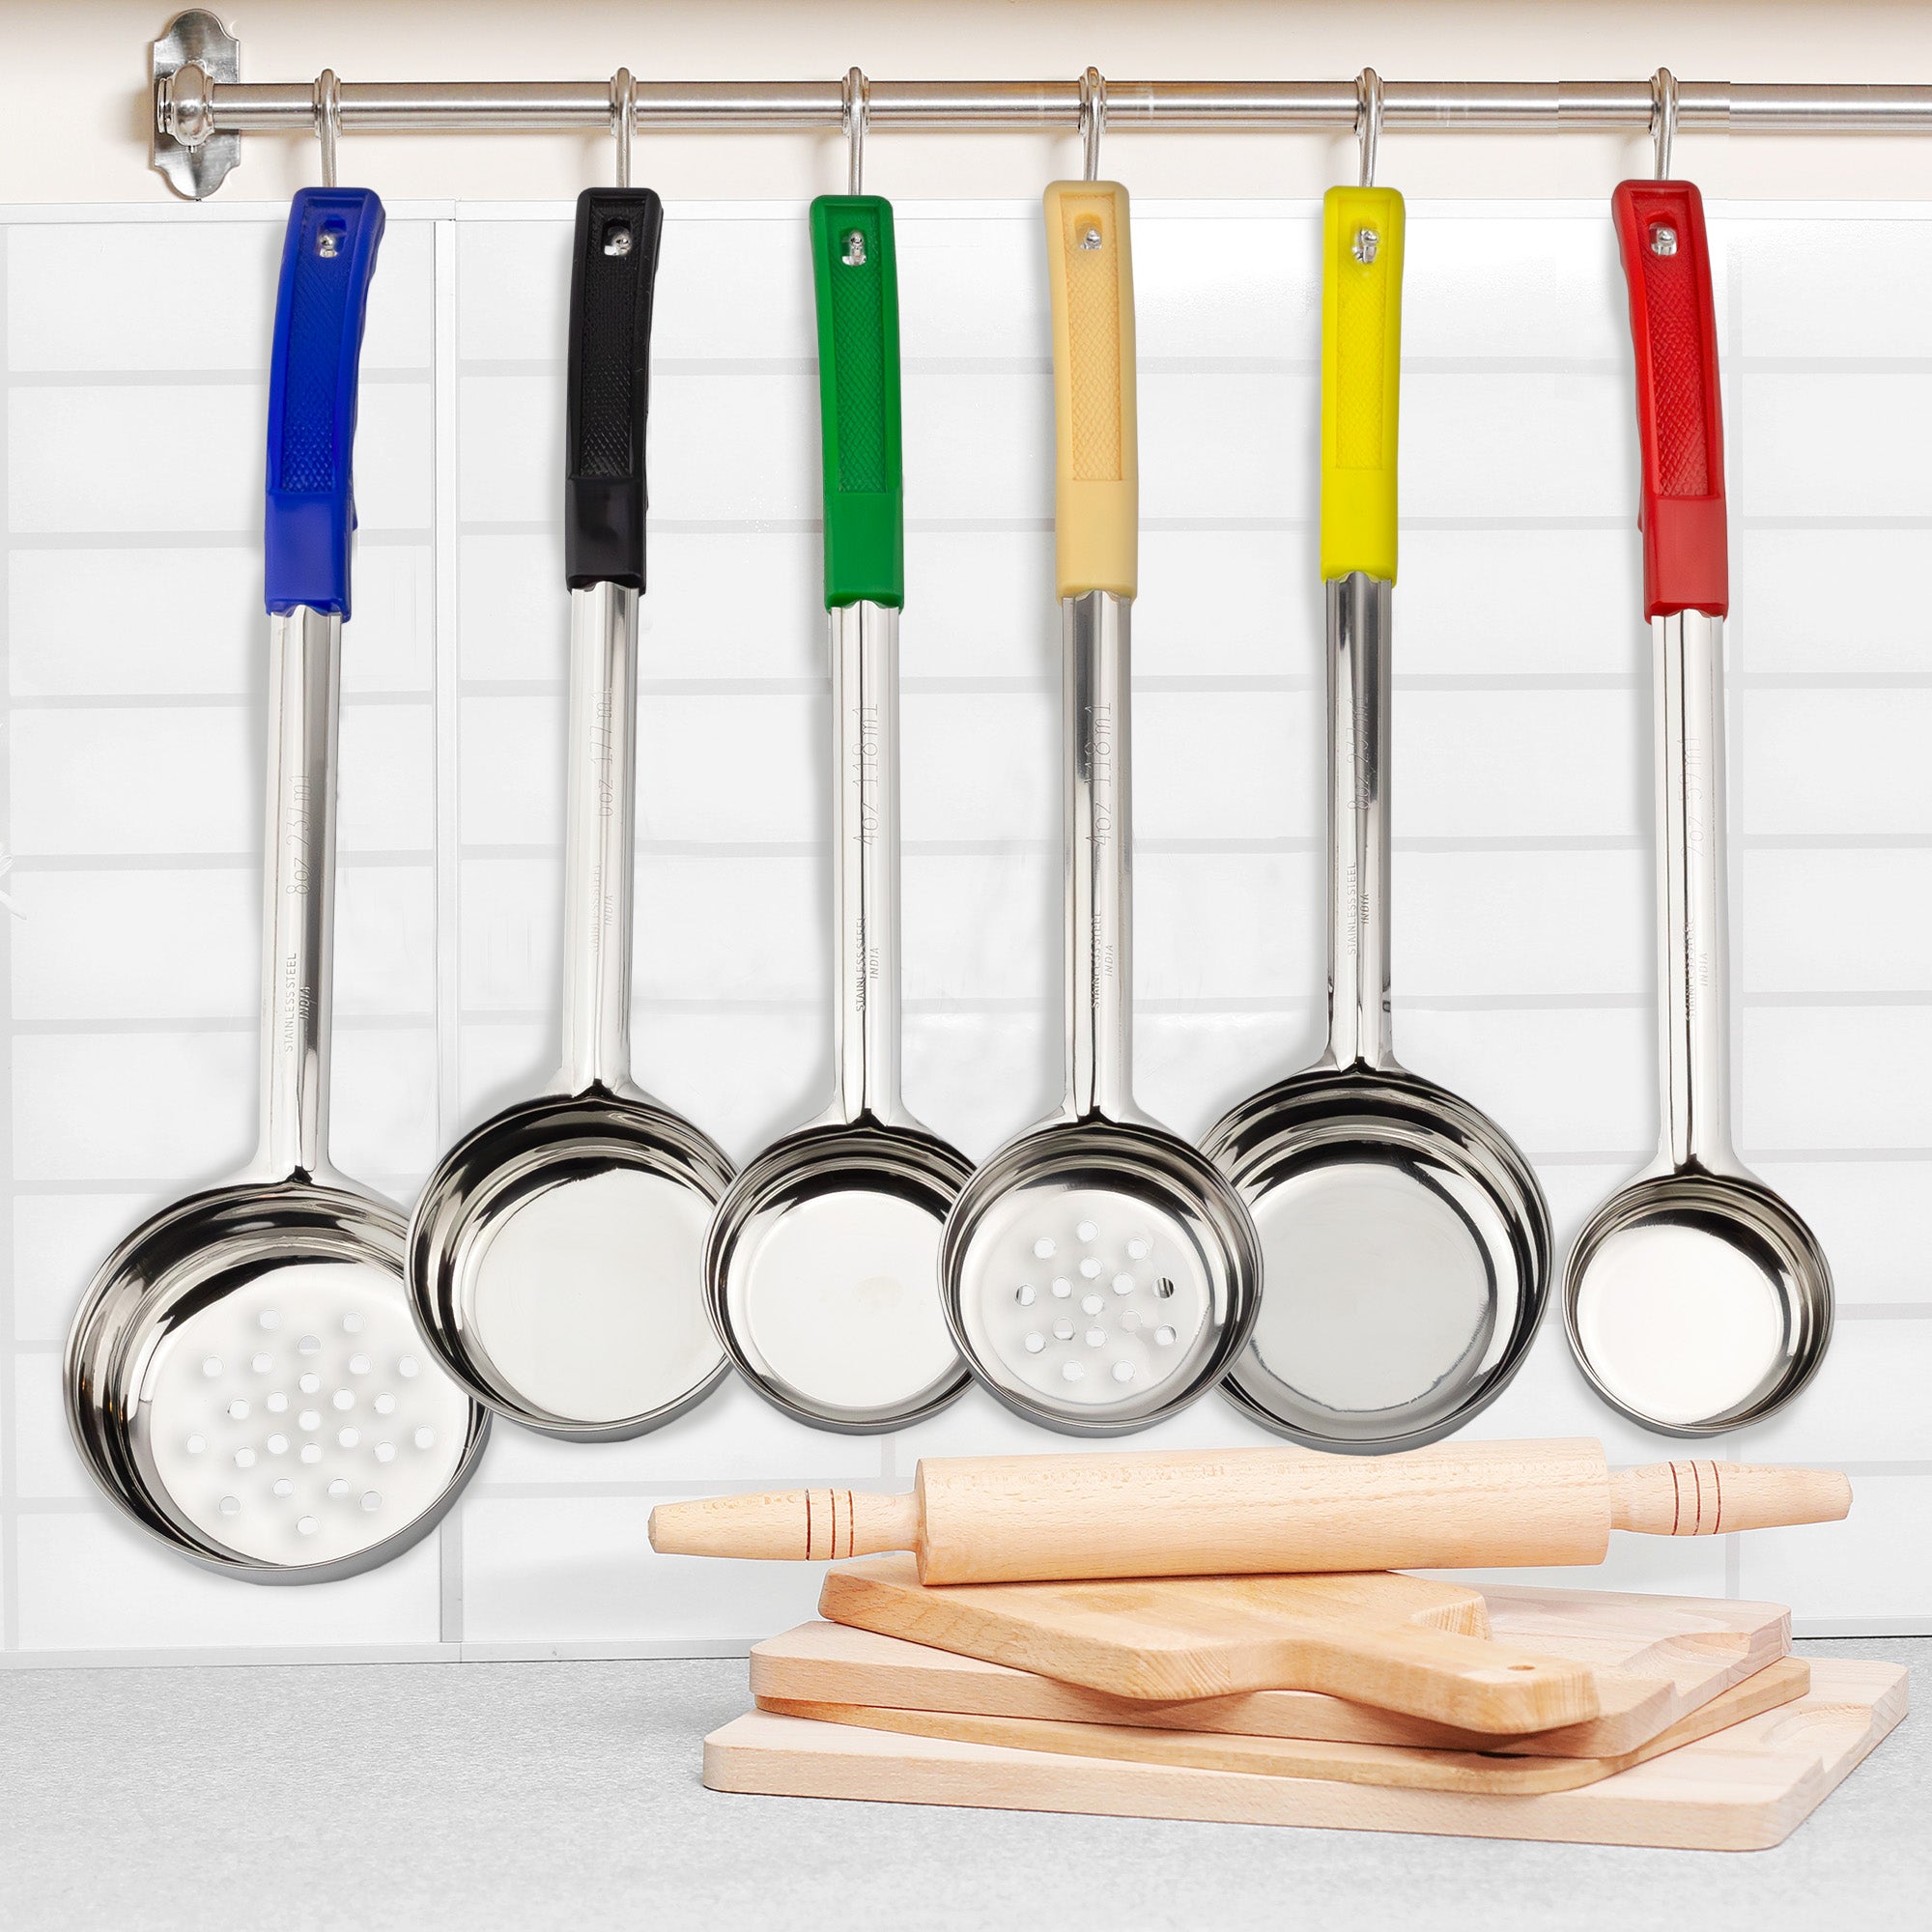 6-Piece Cook Set Kitchen Tools, Serve Set